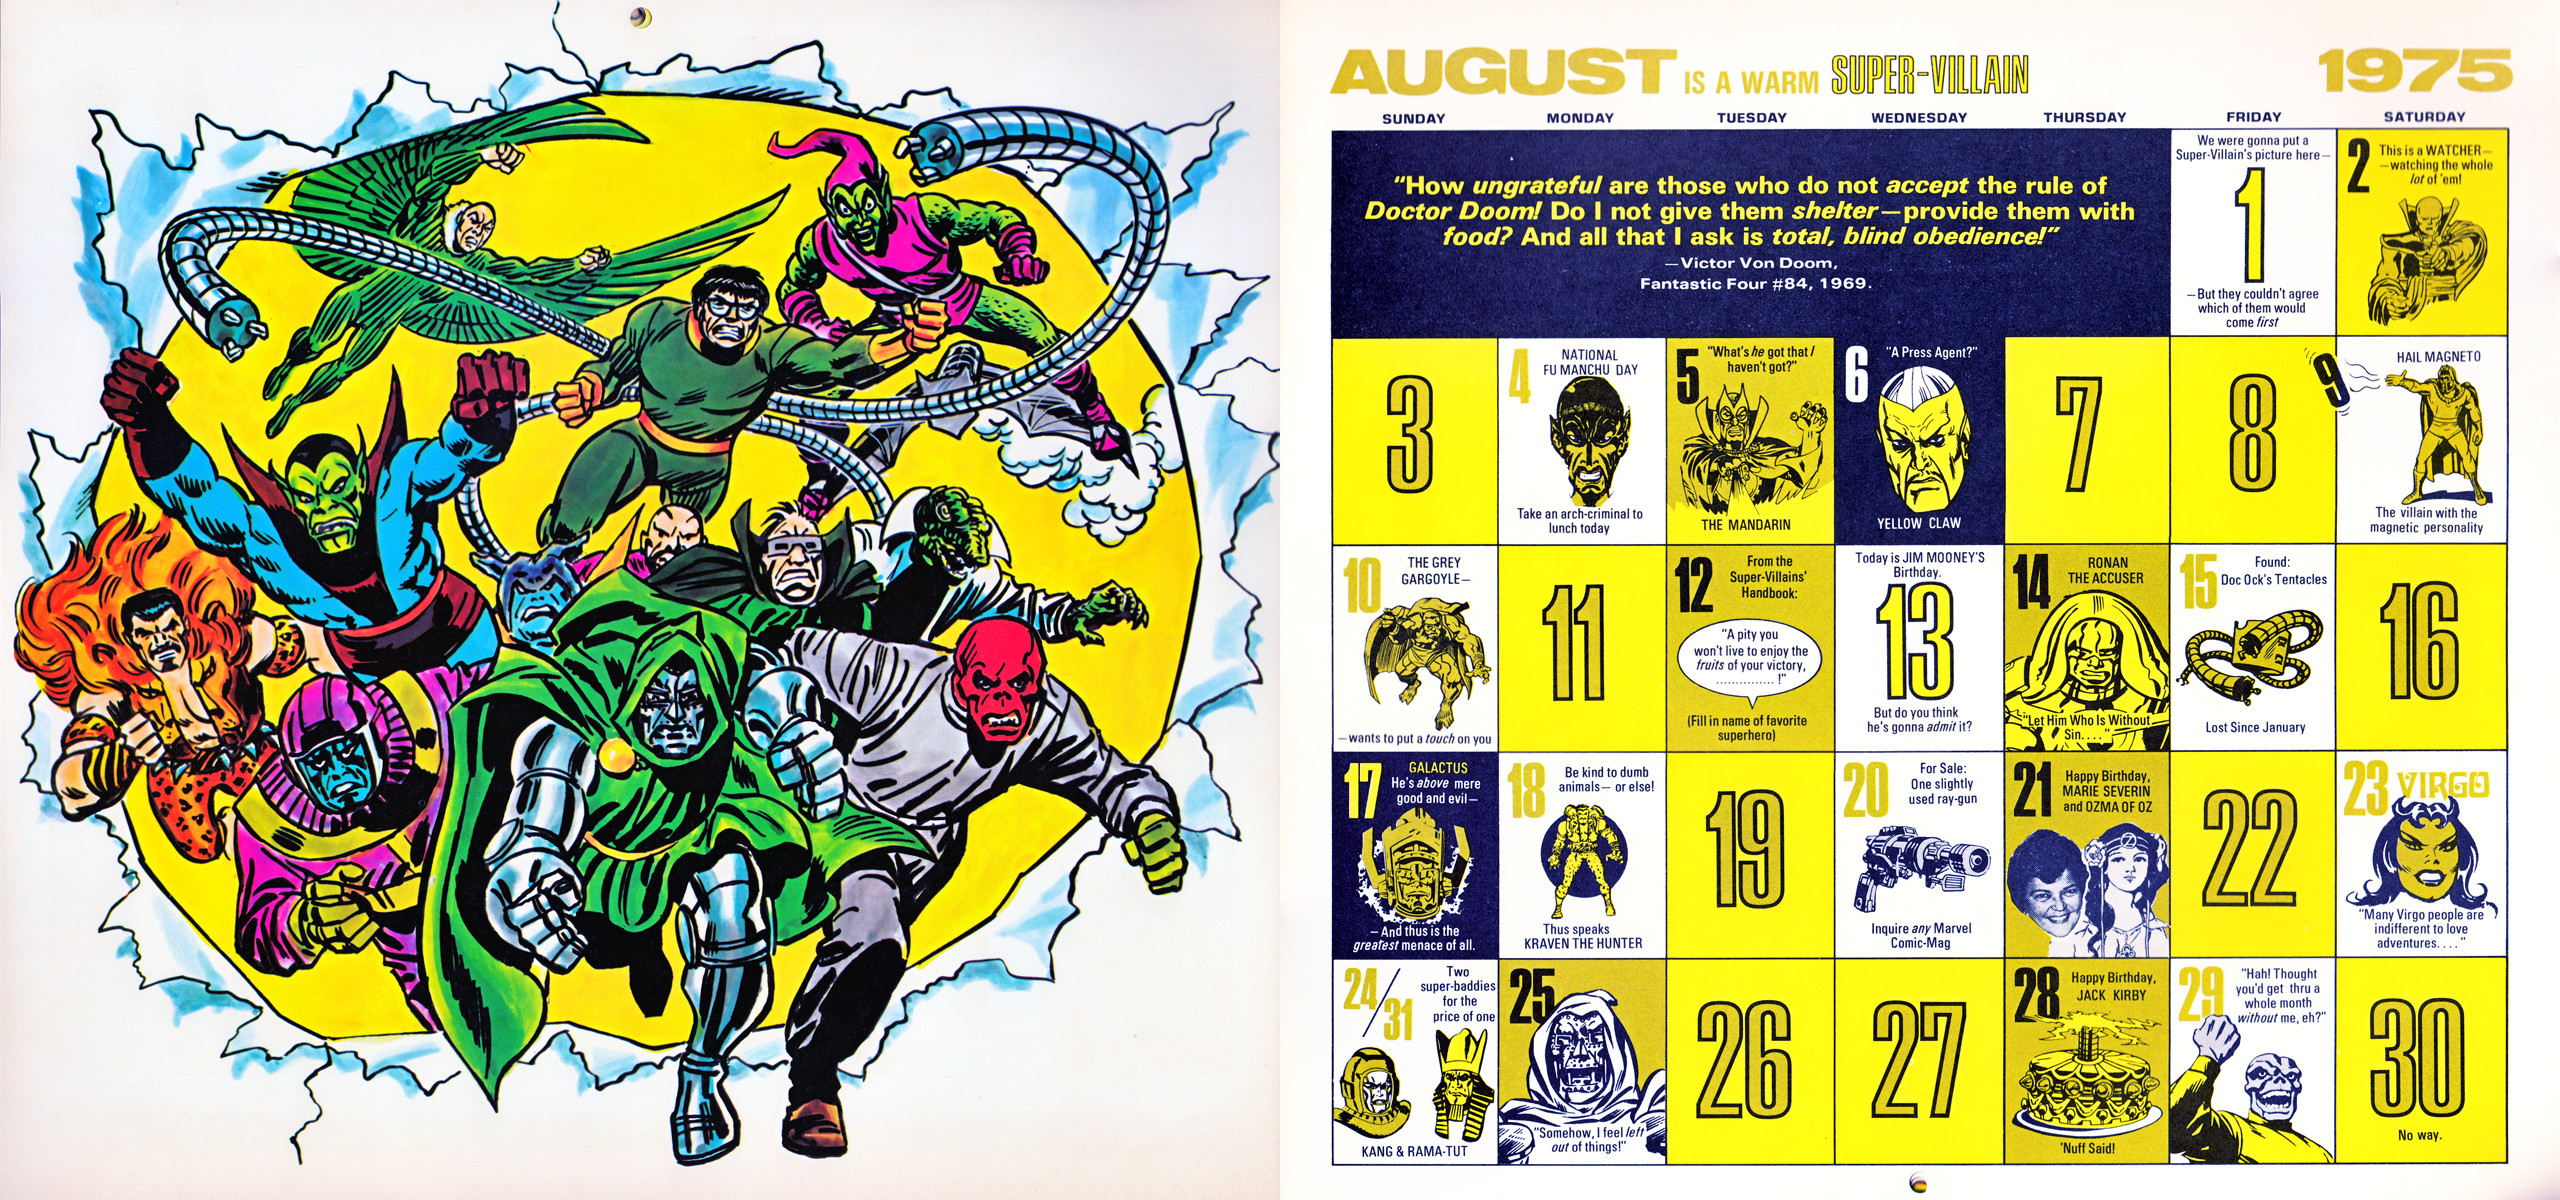 2560x1200 1975 Marvel Comics Calendar - August